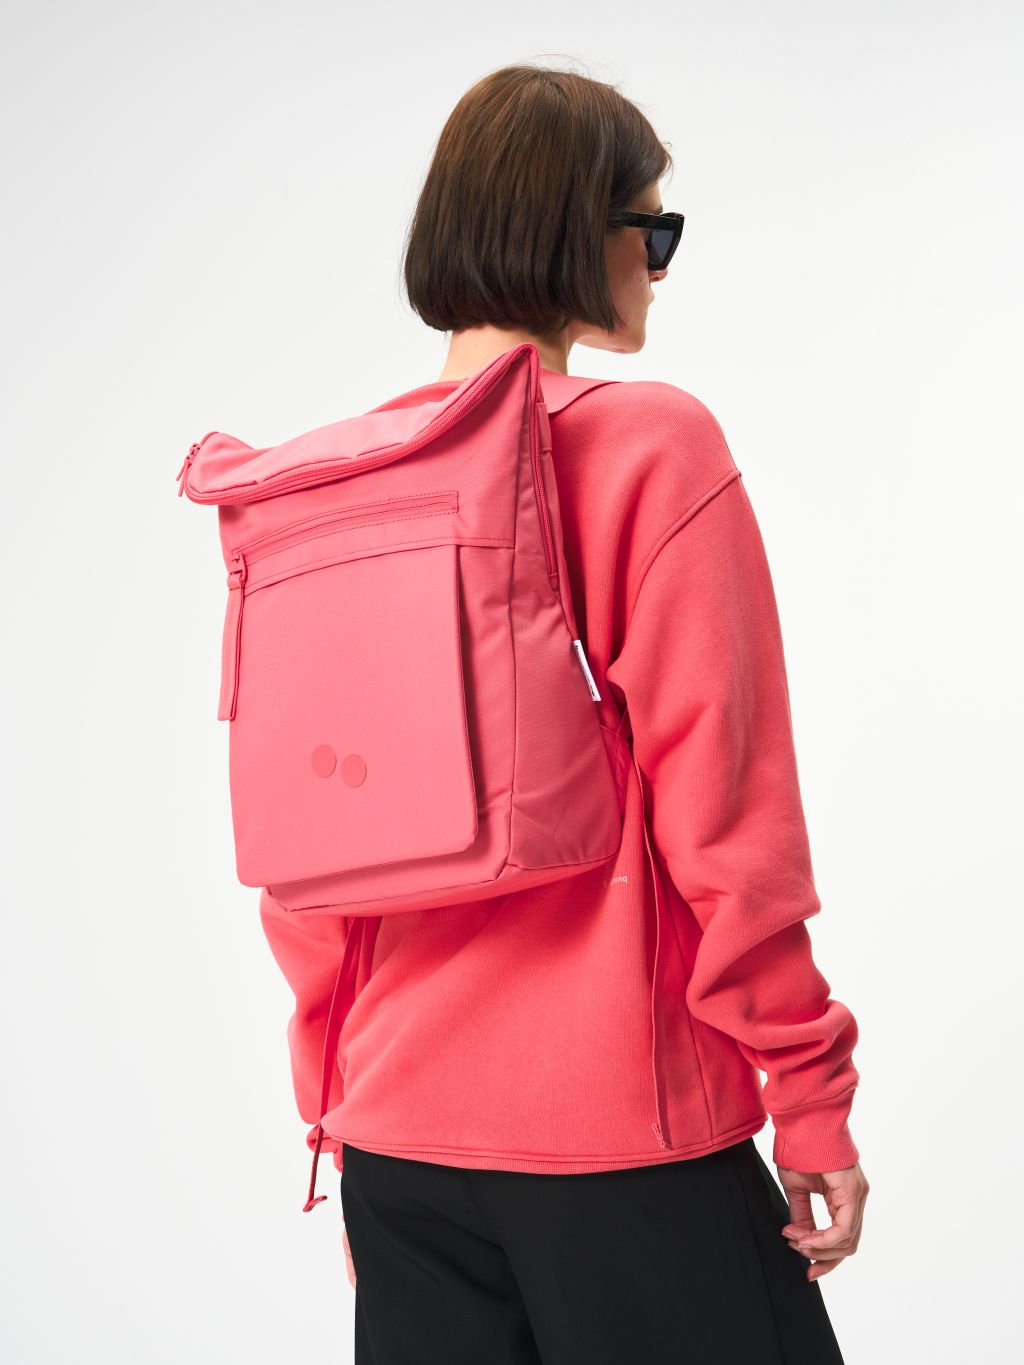 Klak Backpack Watermelon Pink